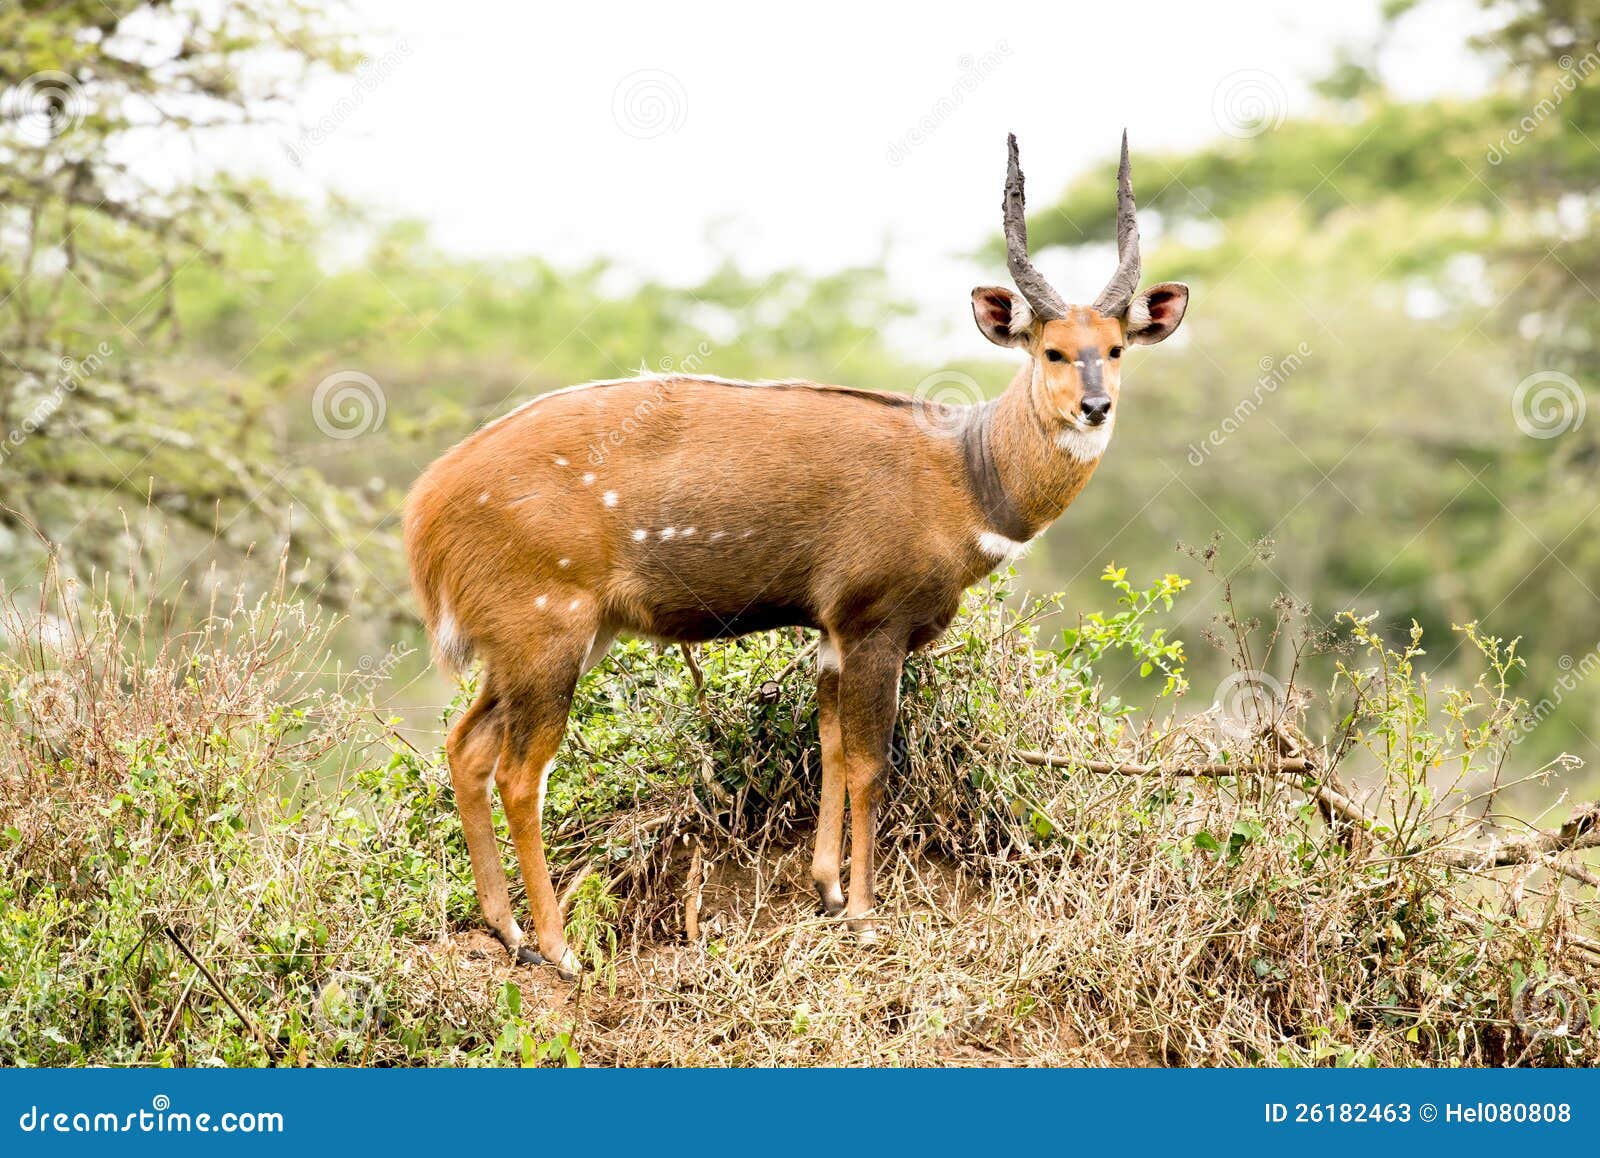 african antelope - bushbuck, uganda, africa